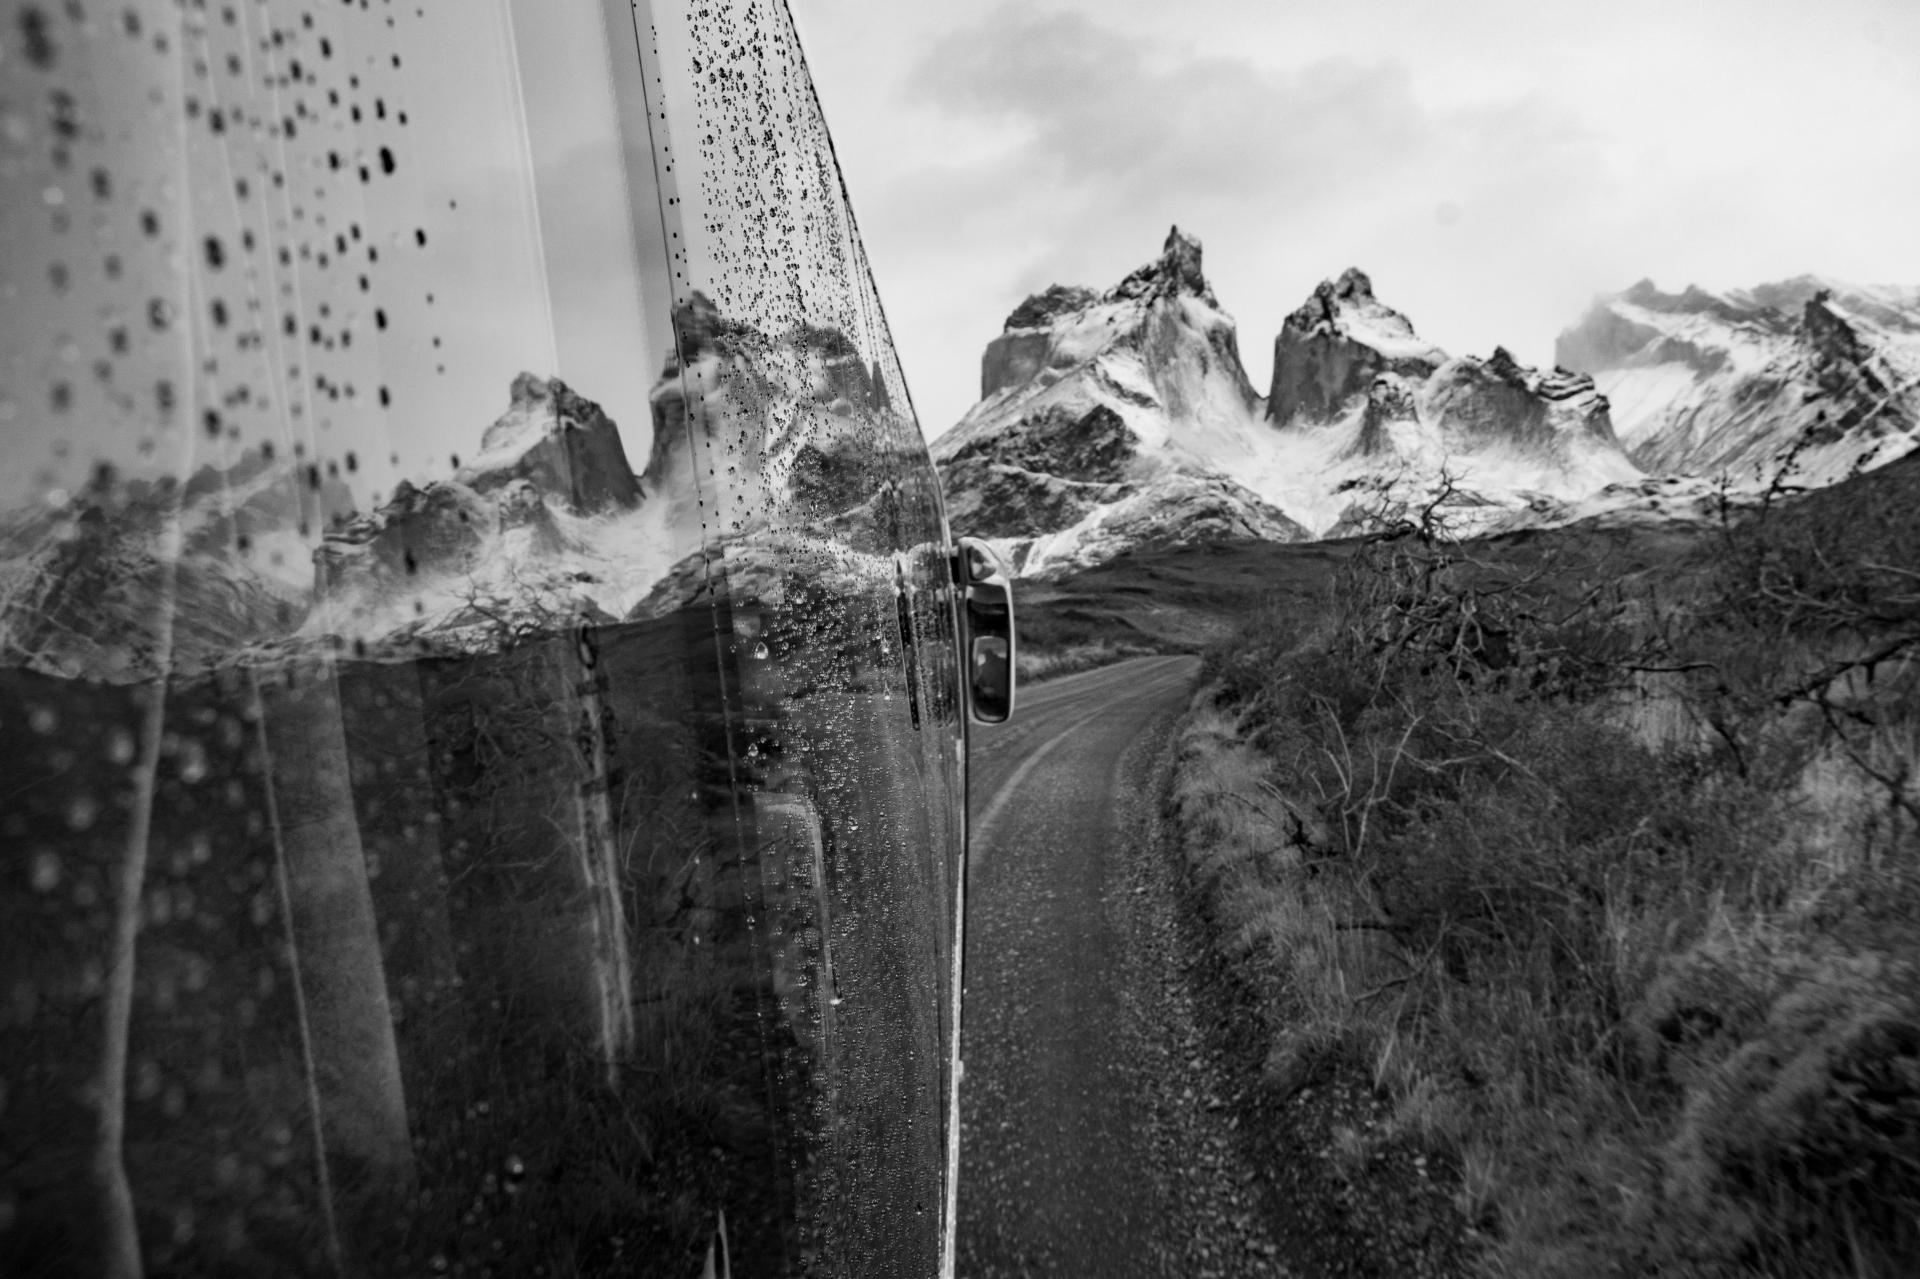 European Photography Awards Winner - Reflection of Patagonia